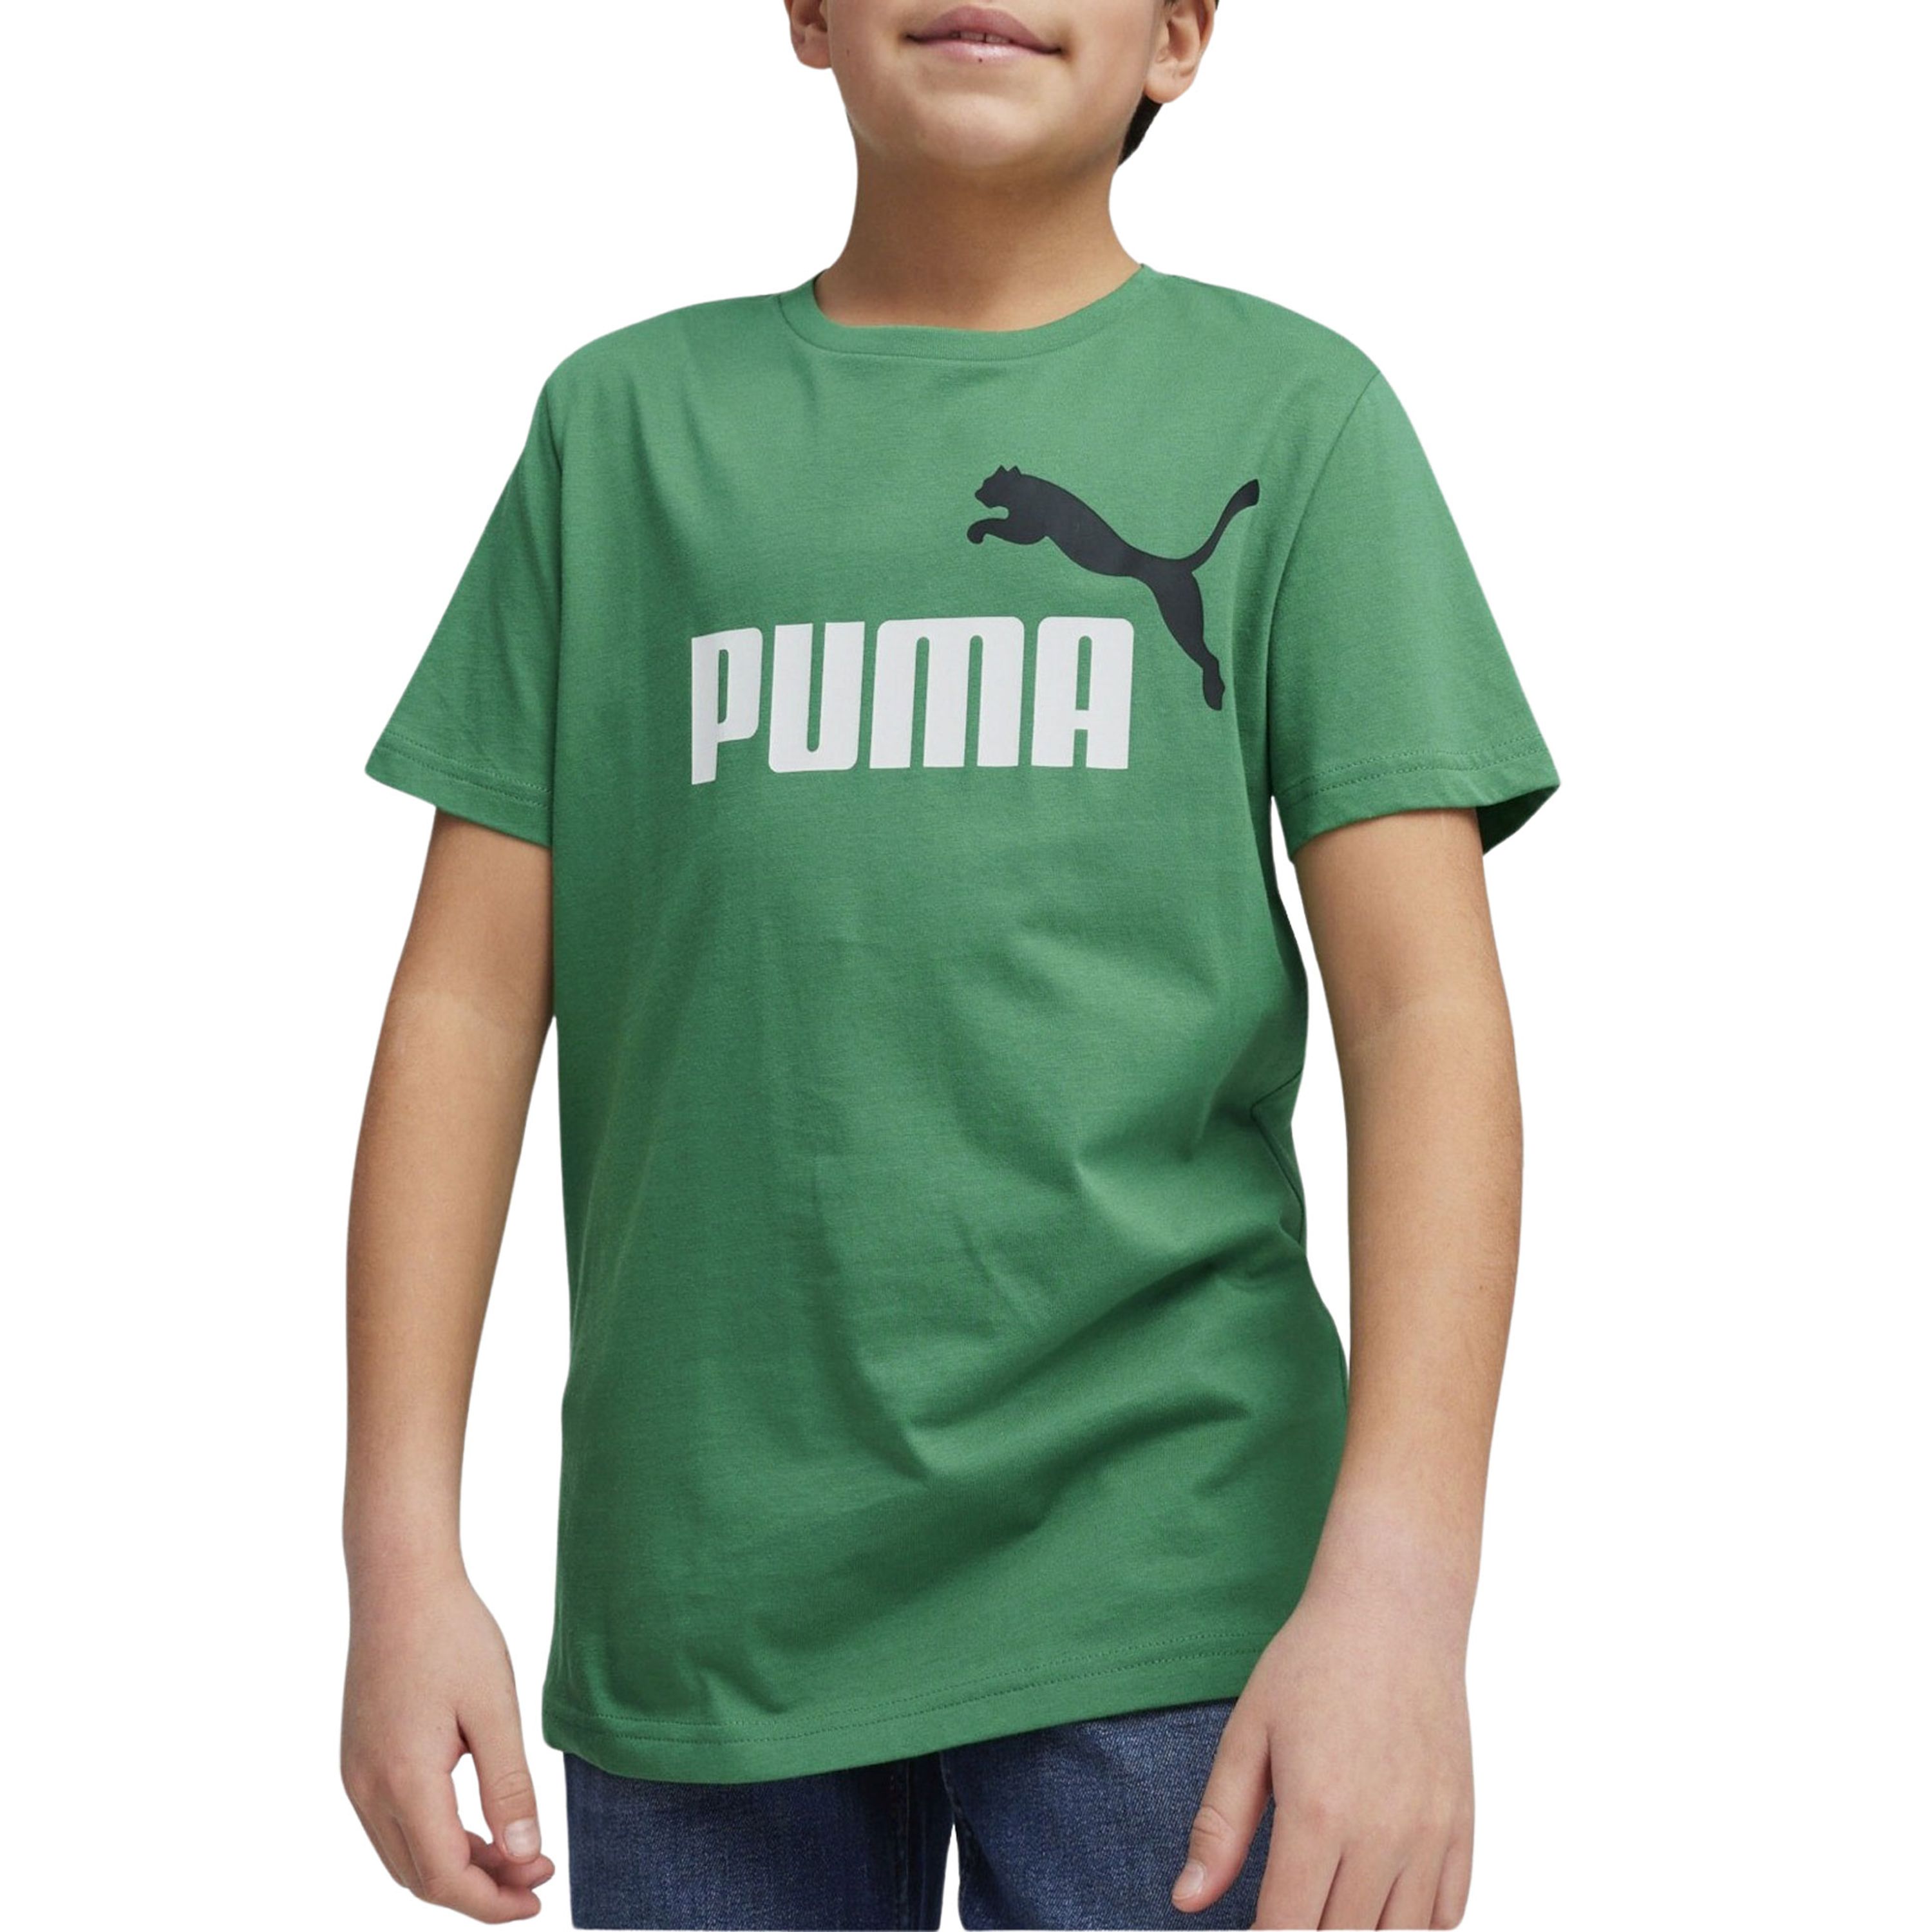 Puma T-shirt groen Katoen Ronde hals Logo 164